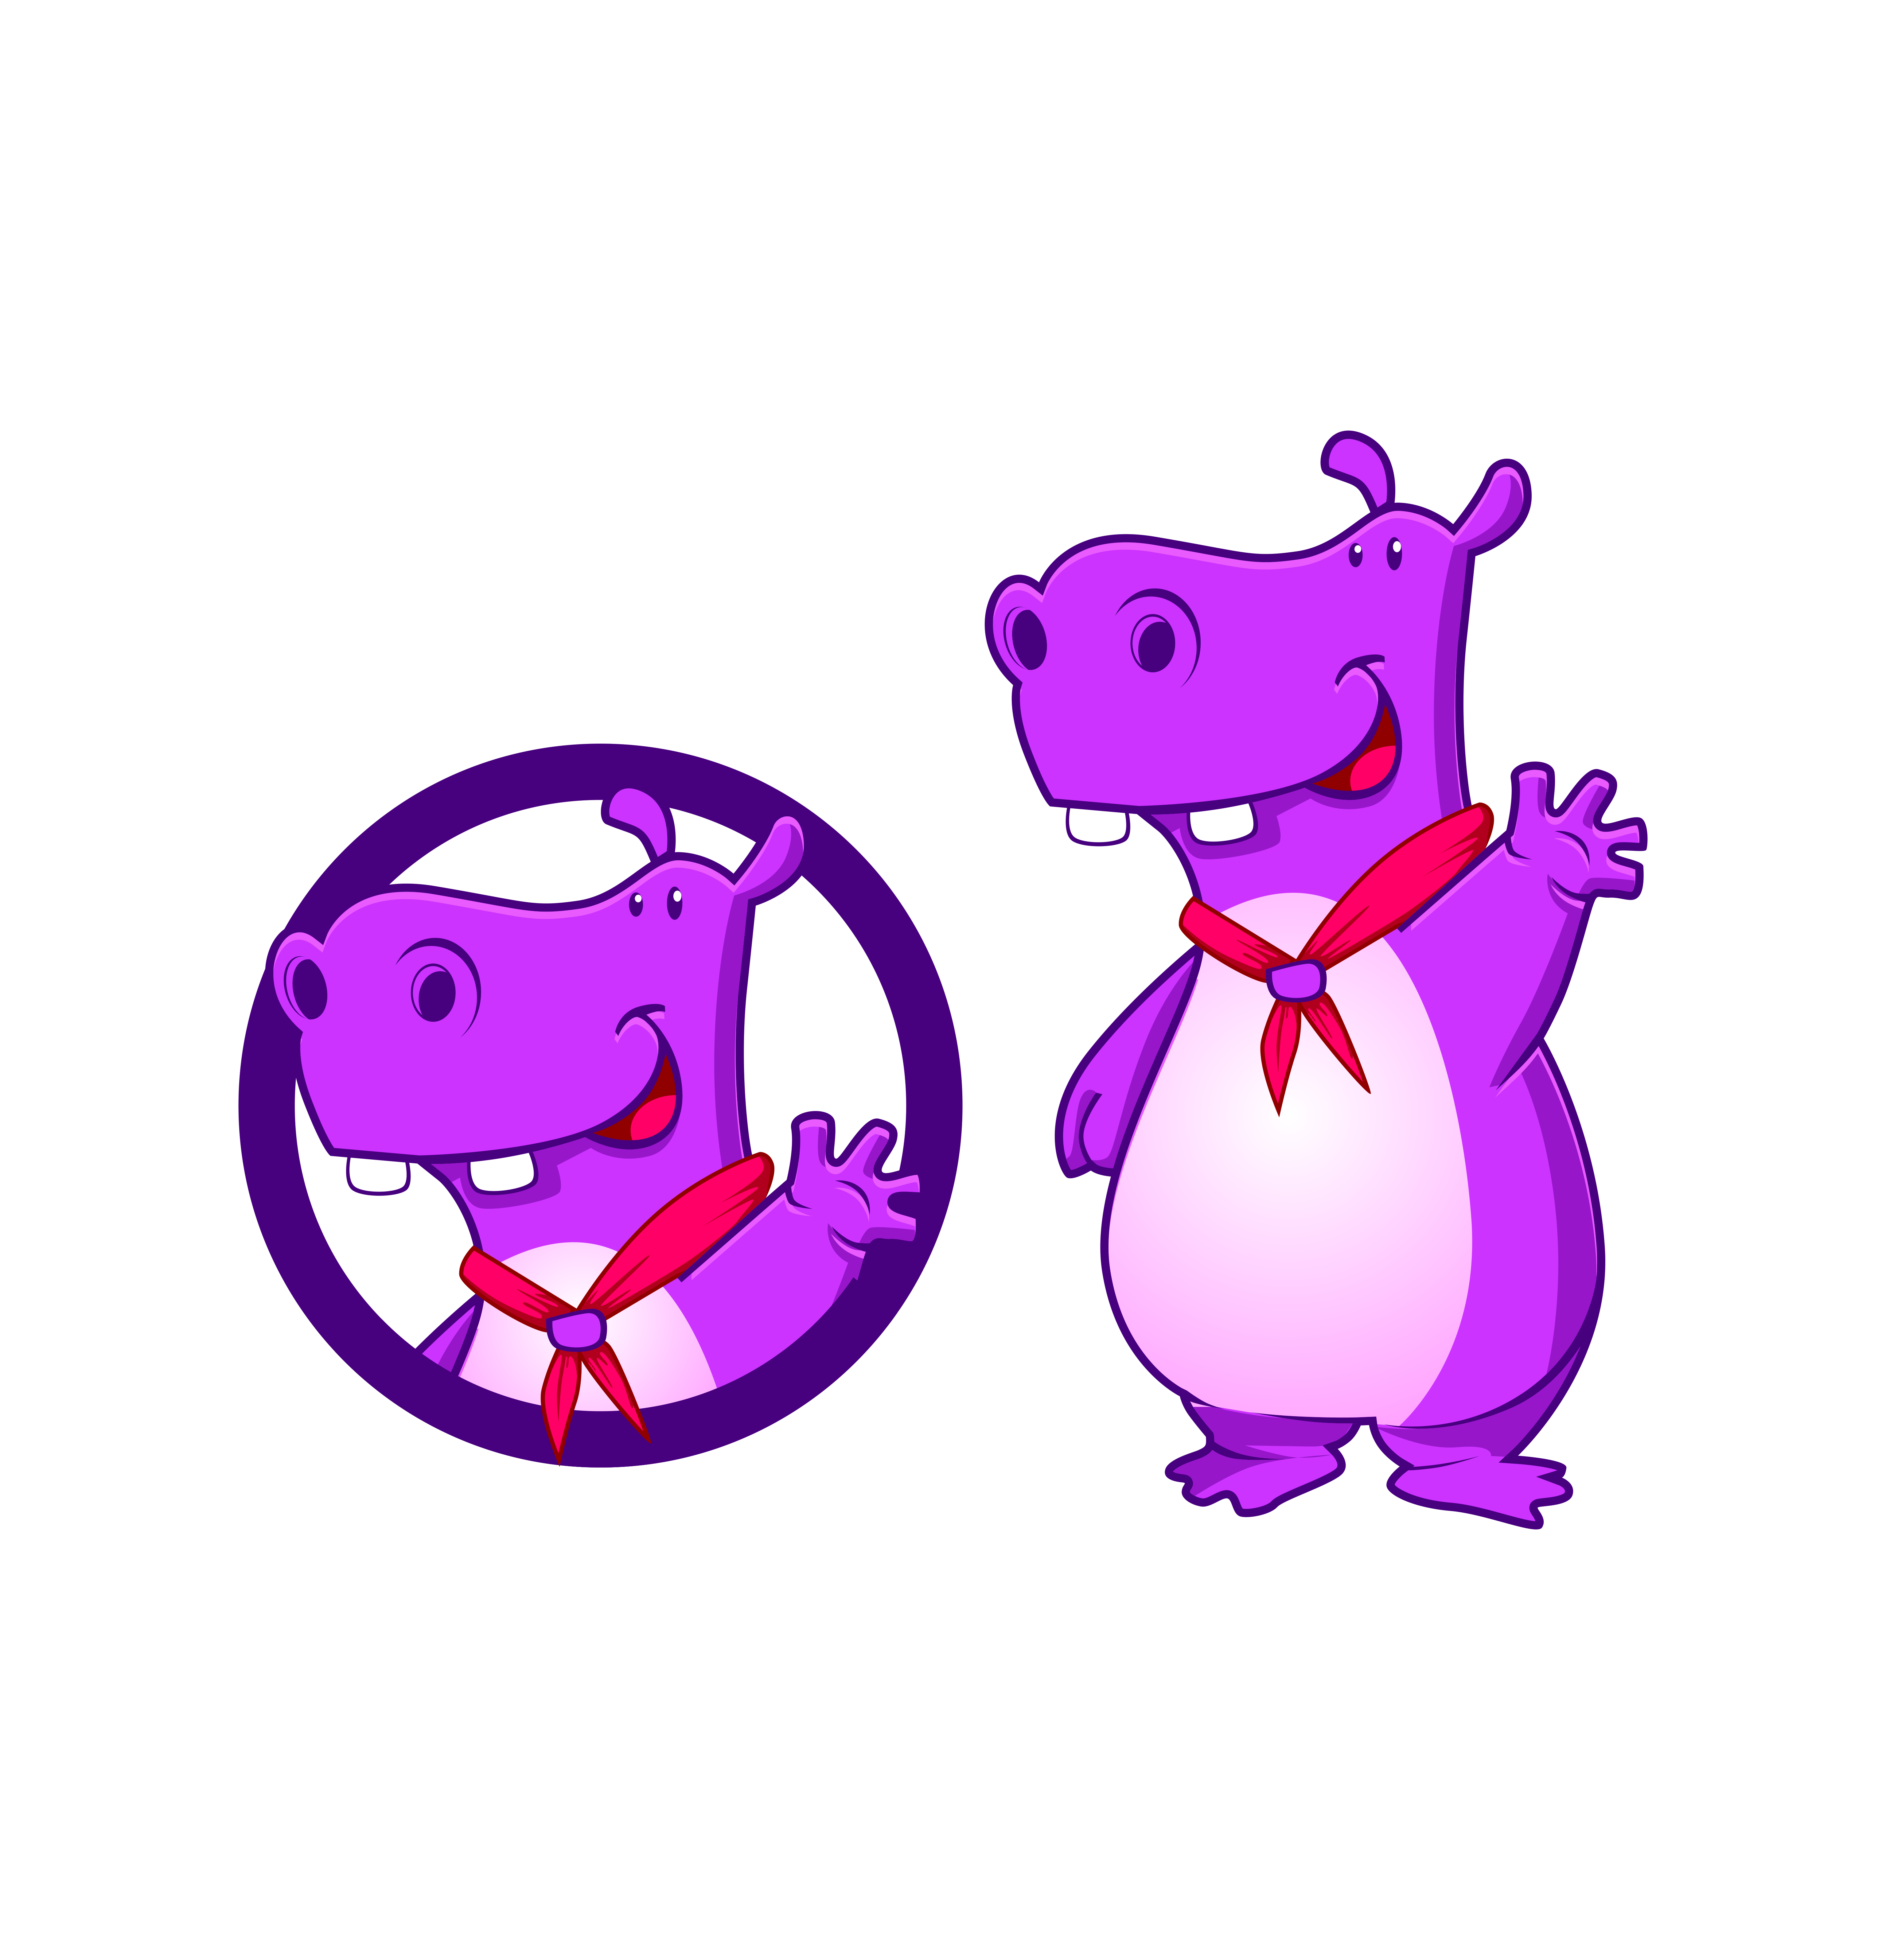 Hippo Fun Character Mascot logo designs - Download Free ...